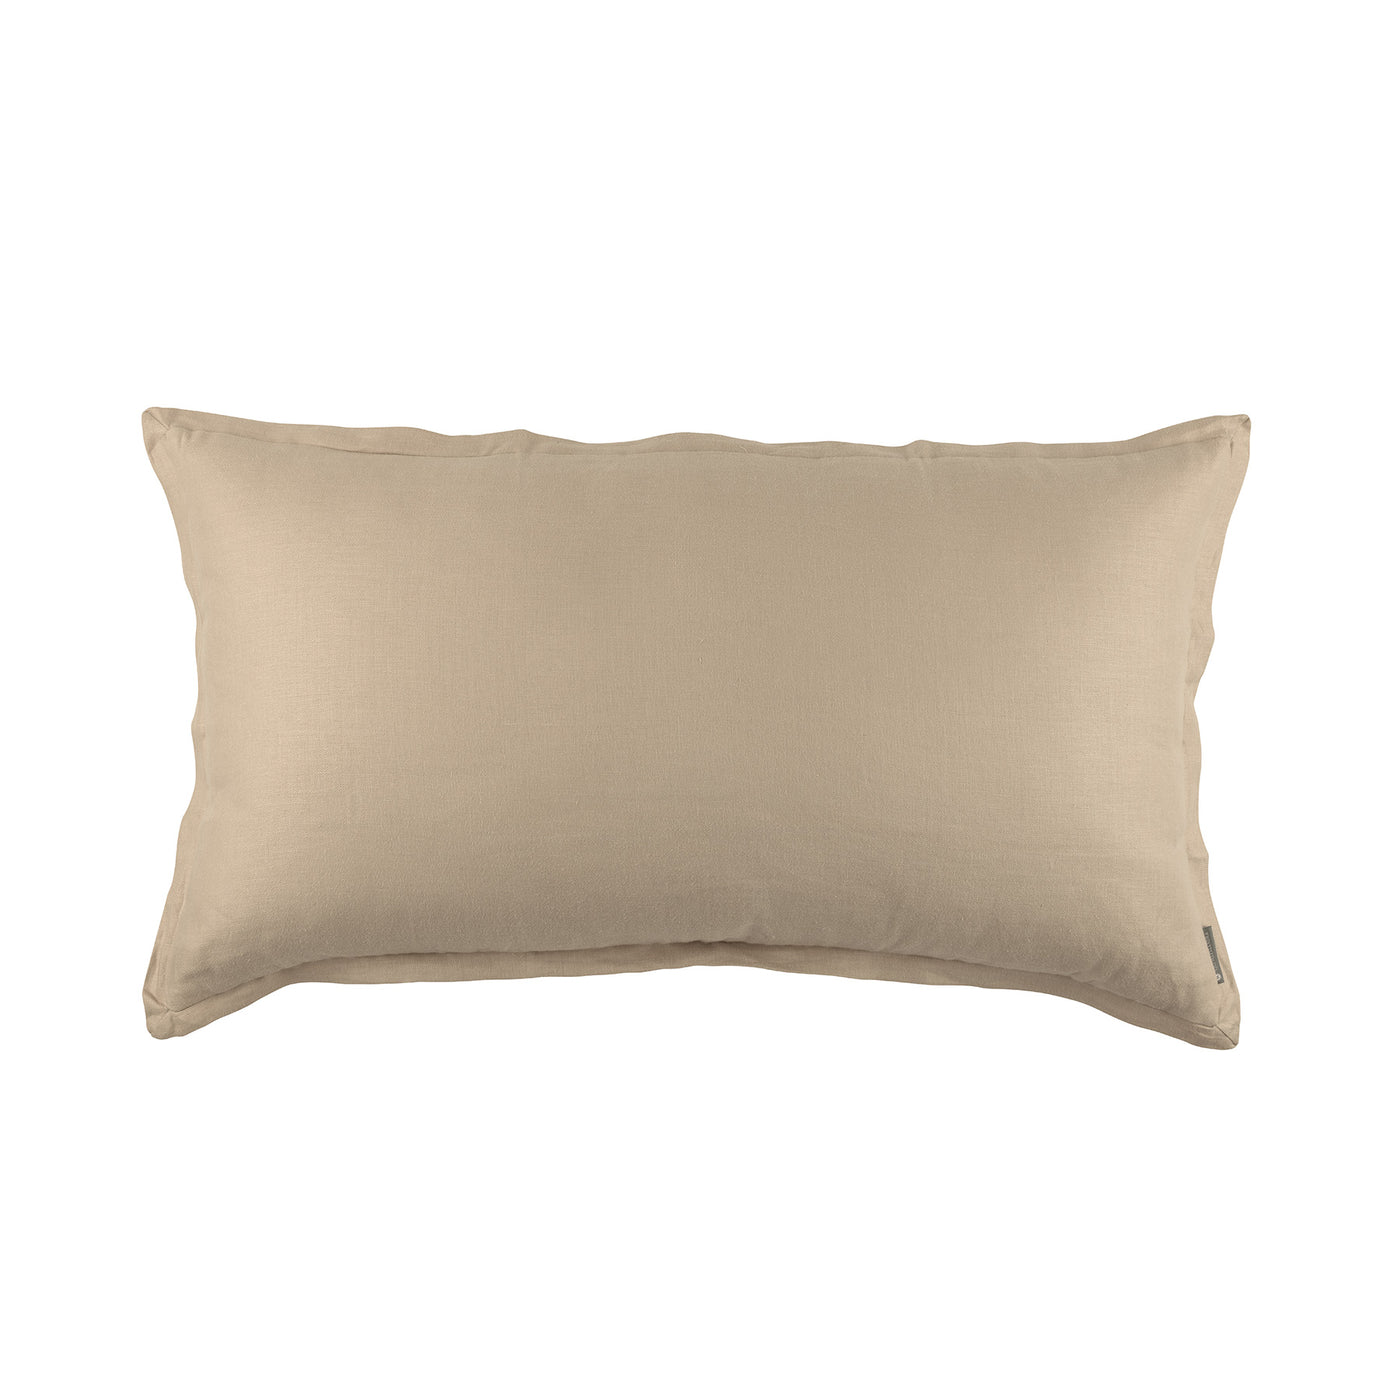 Terra Croissant King Pillow 20x36